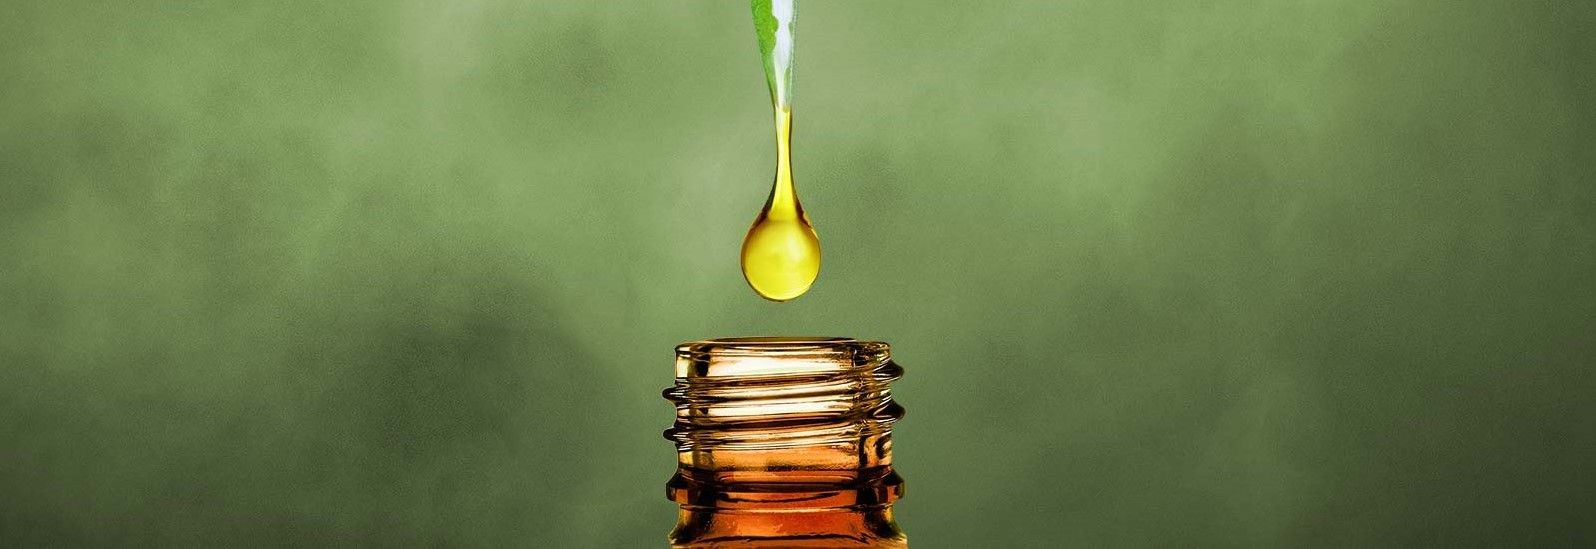 cbd oil image